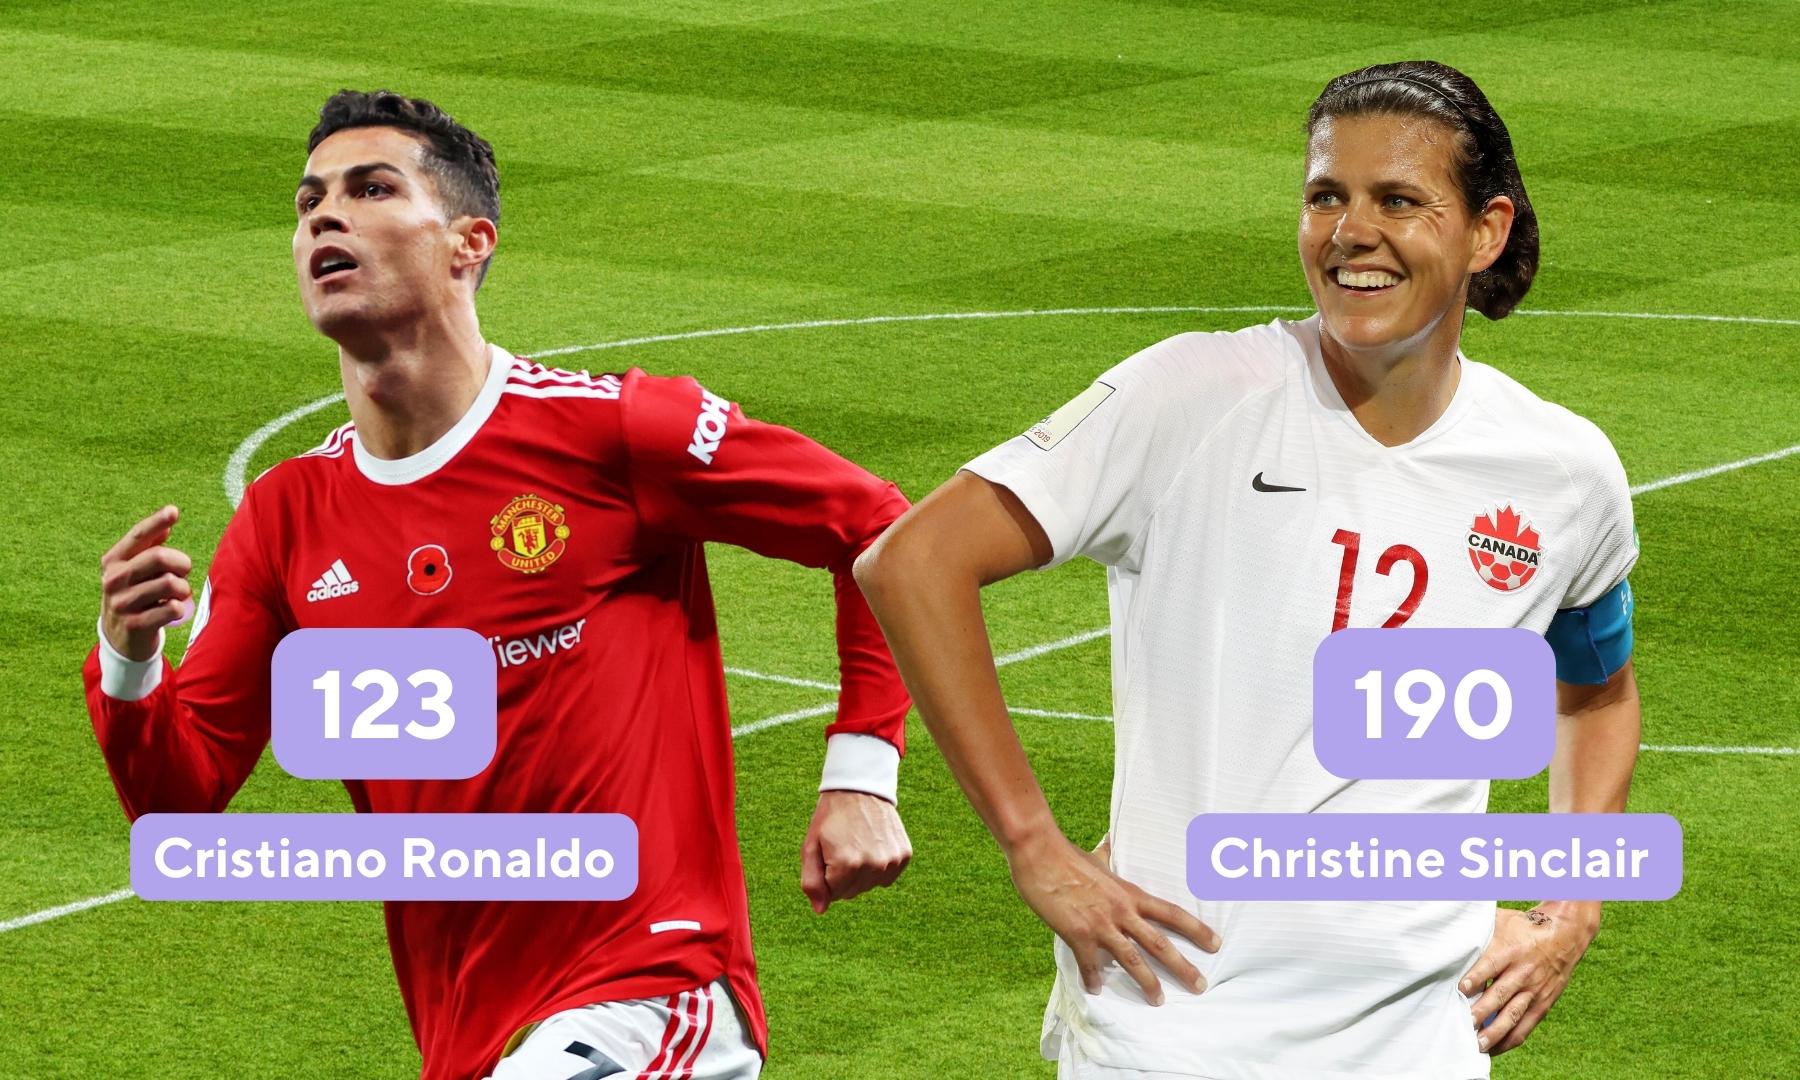 Soccer statistics for highest goalscorer in international football featuring Cristiano Ronaldo and Christine Sinclair.